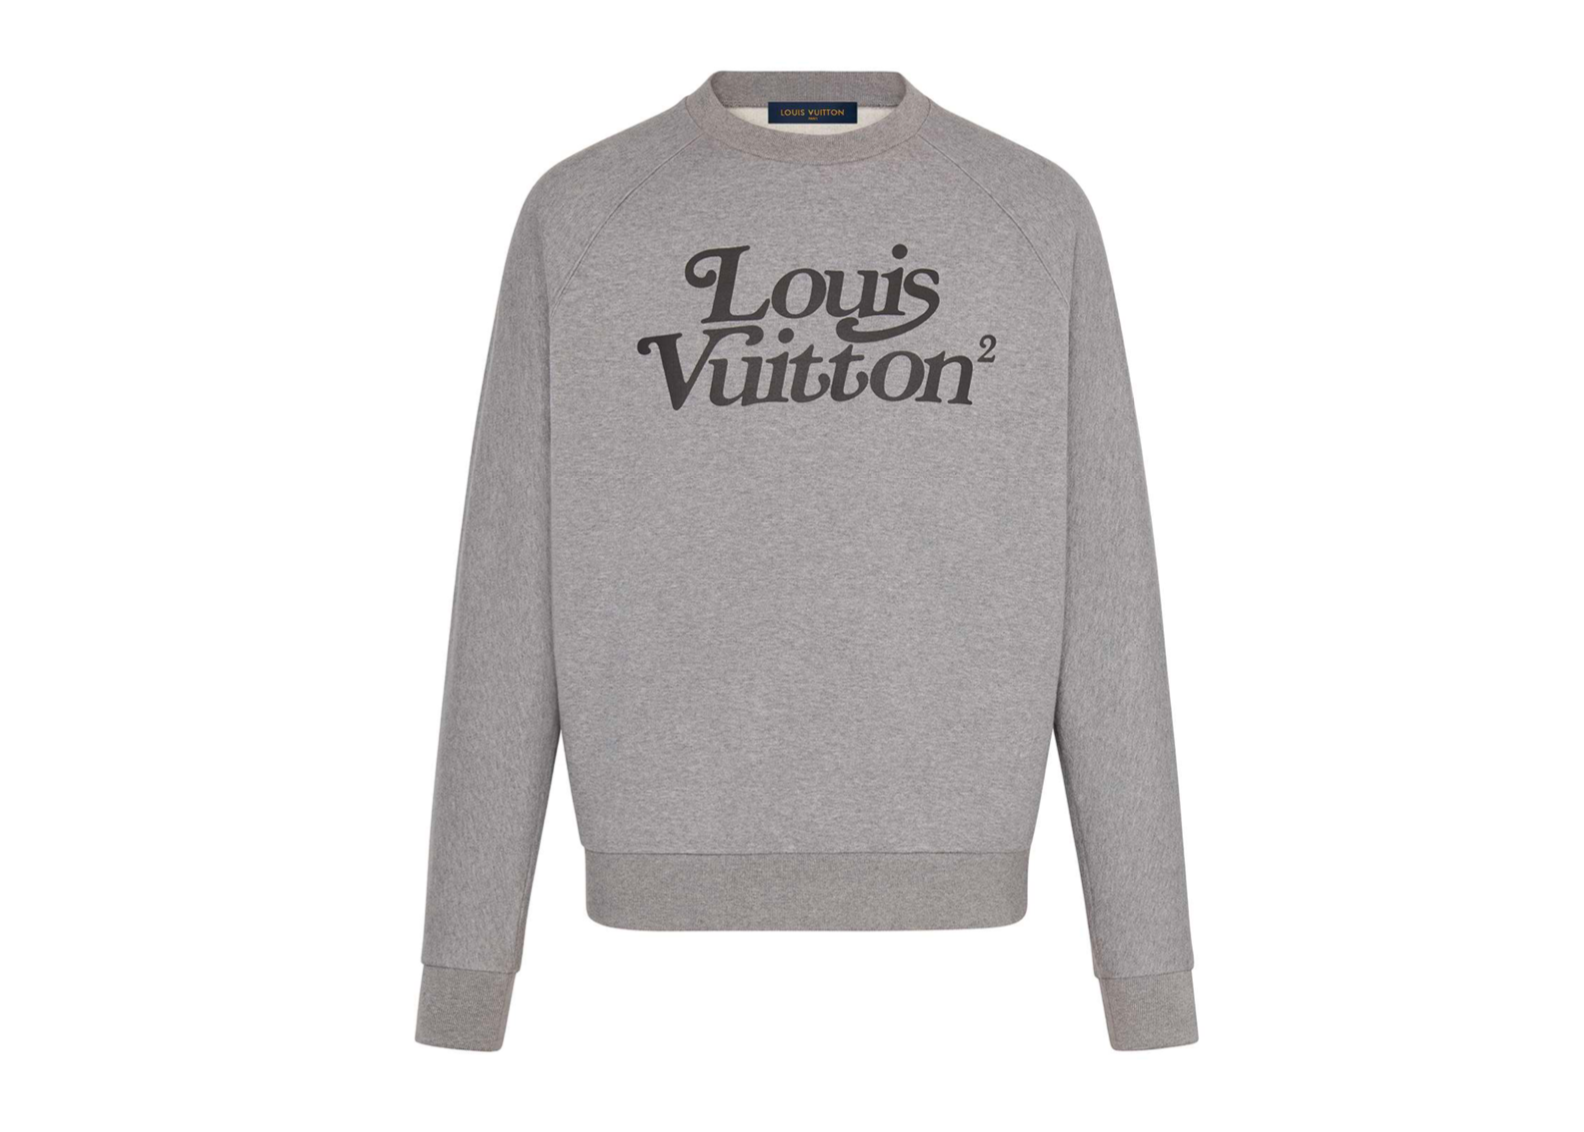 Louis Vuitton x Nigo Squared LV Sweatshirt Gris Clair streetwear